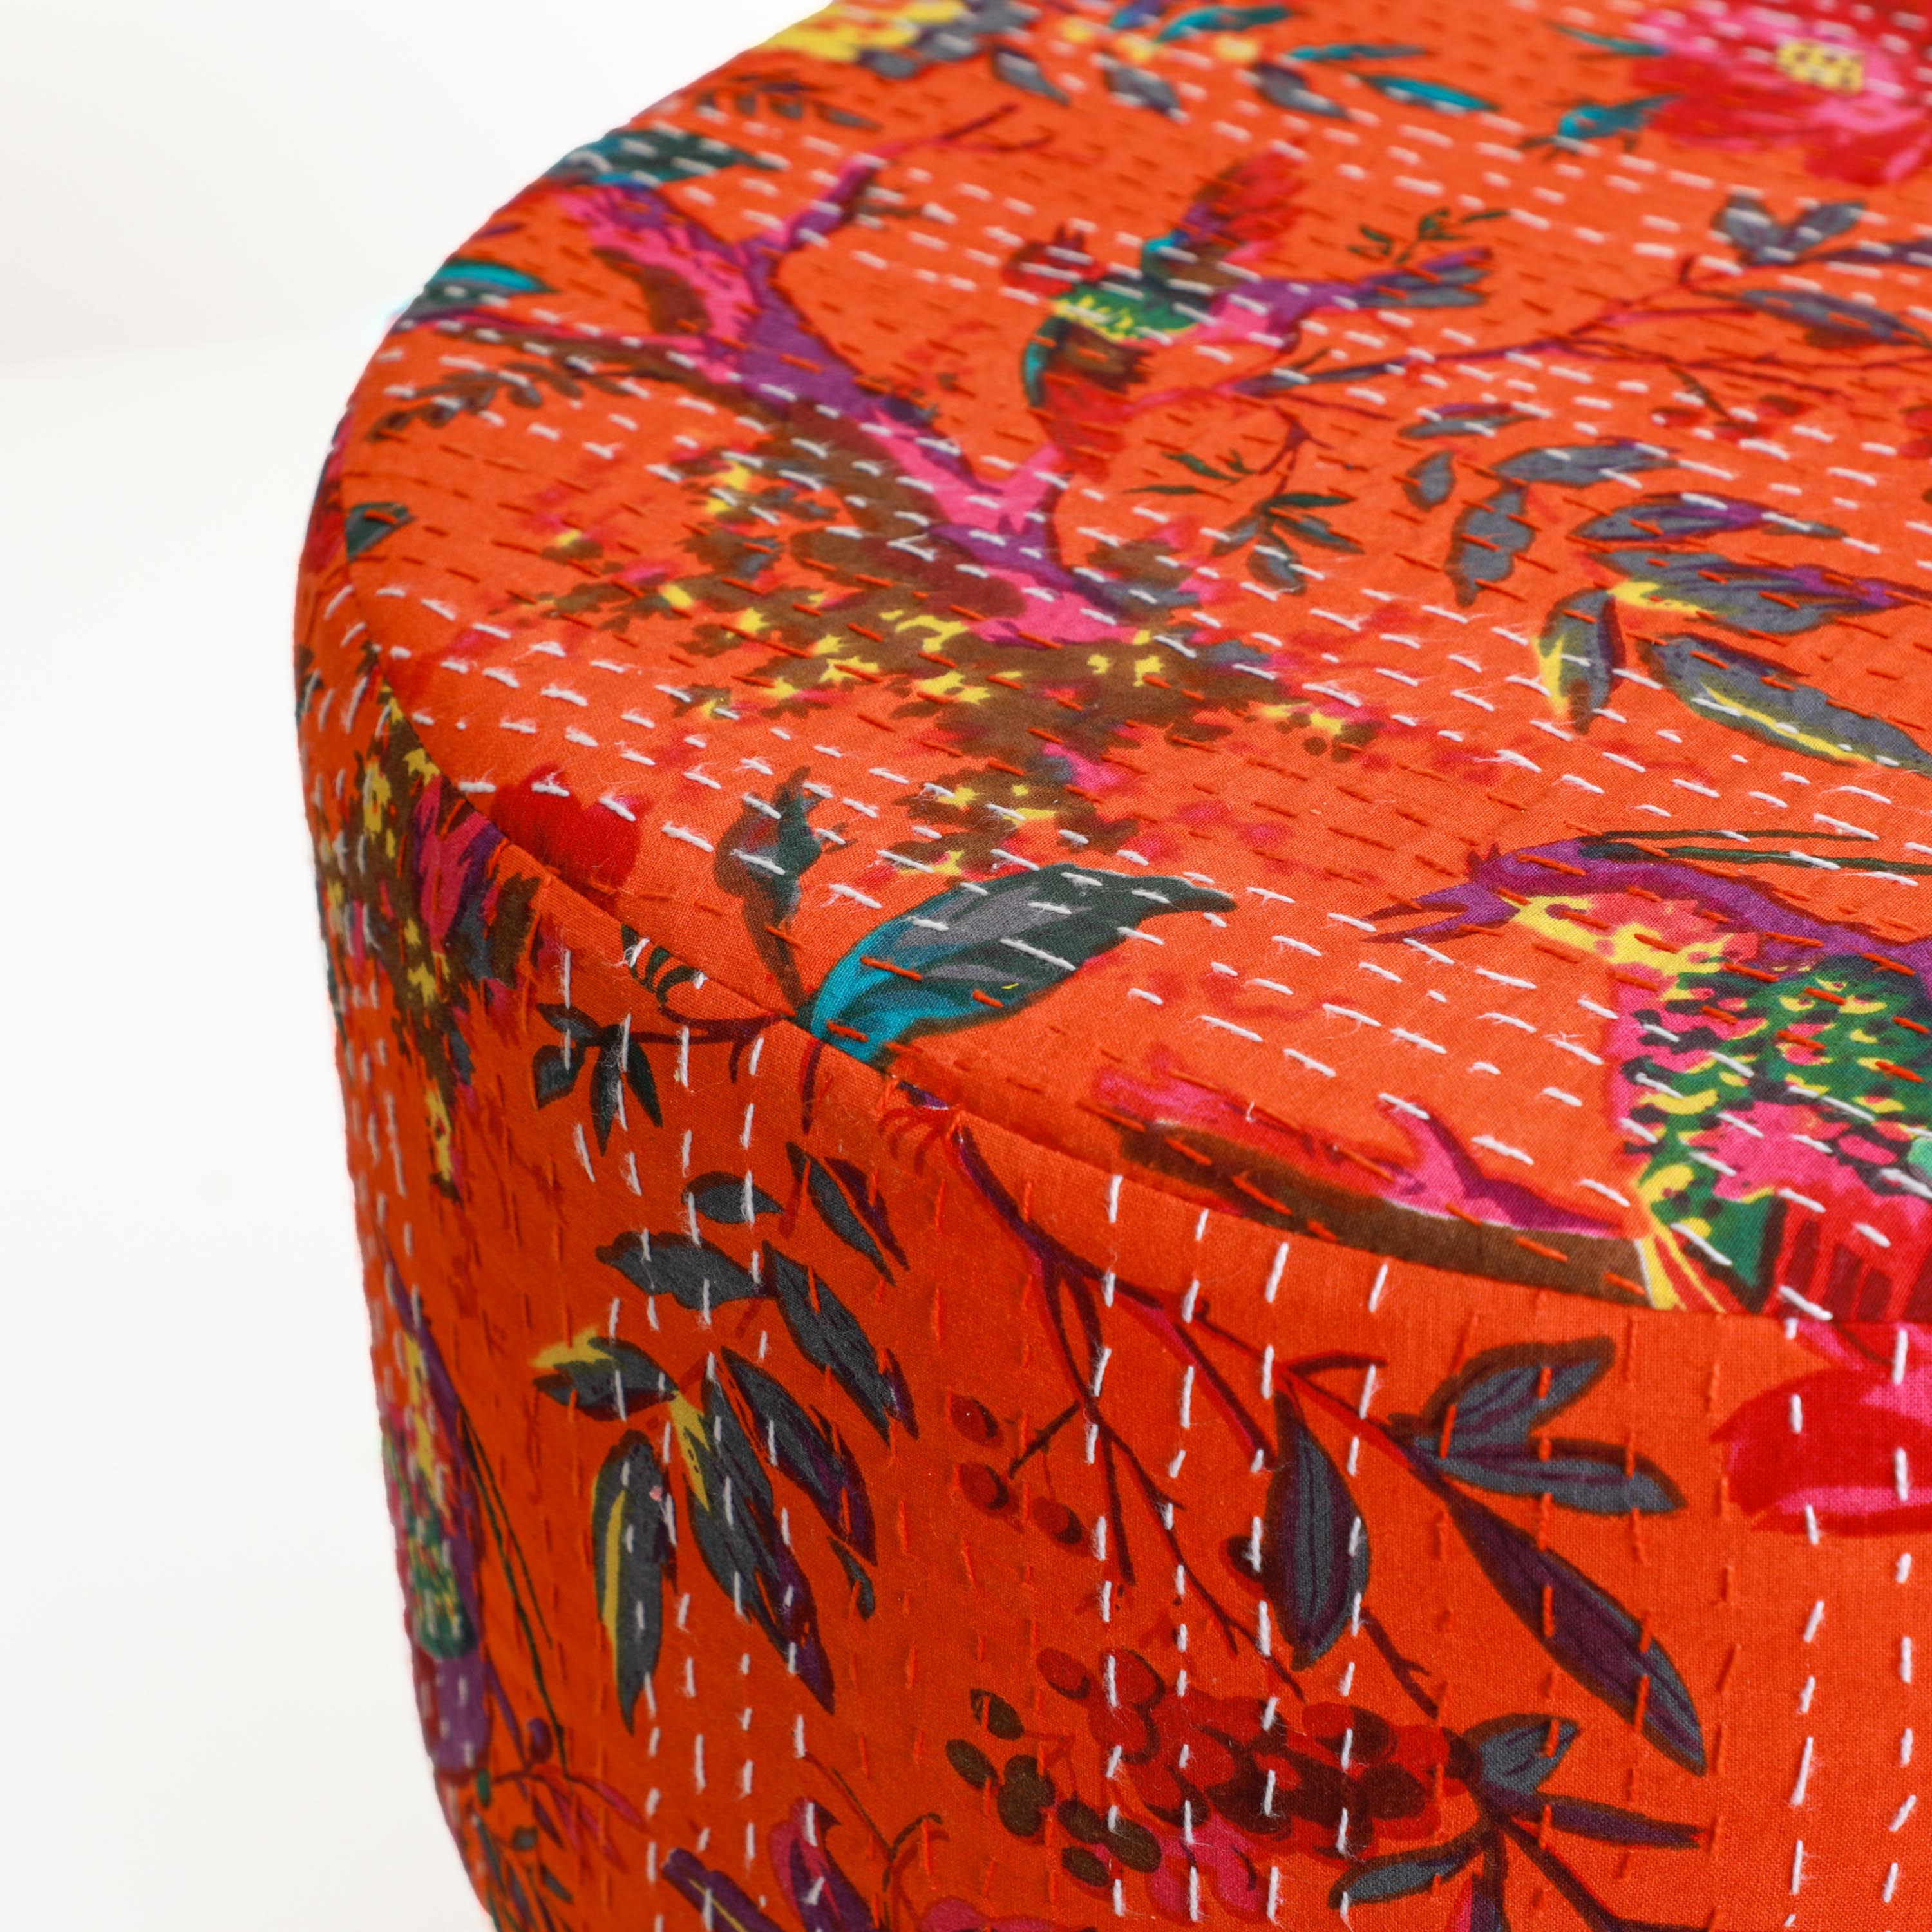 Orange Soft fabric ottoman for living room decor